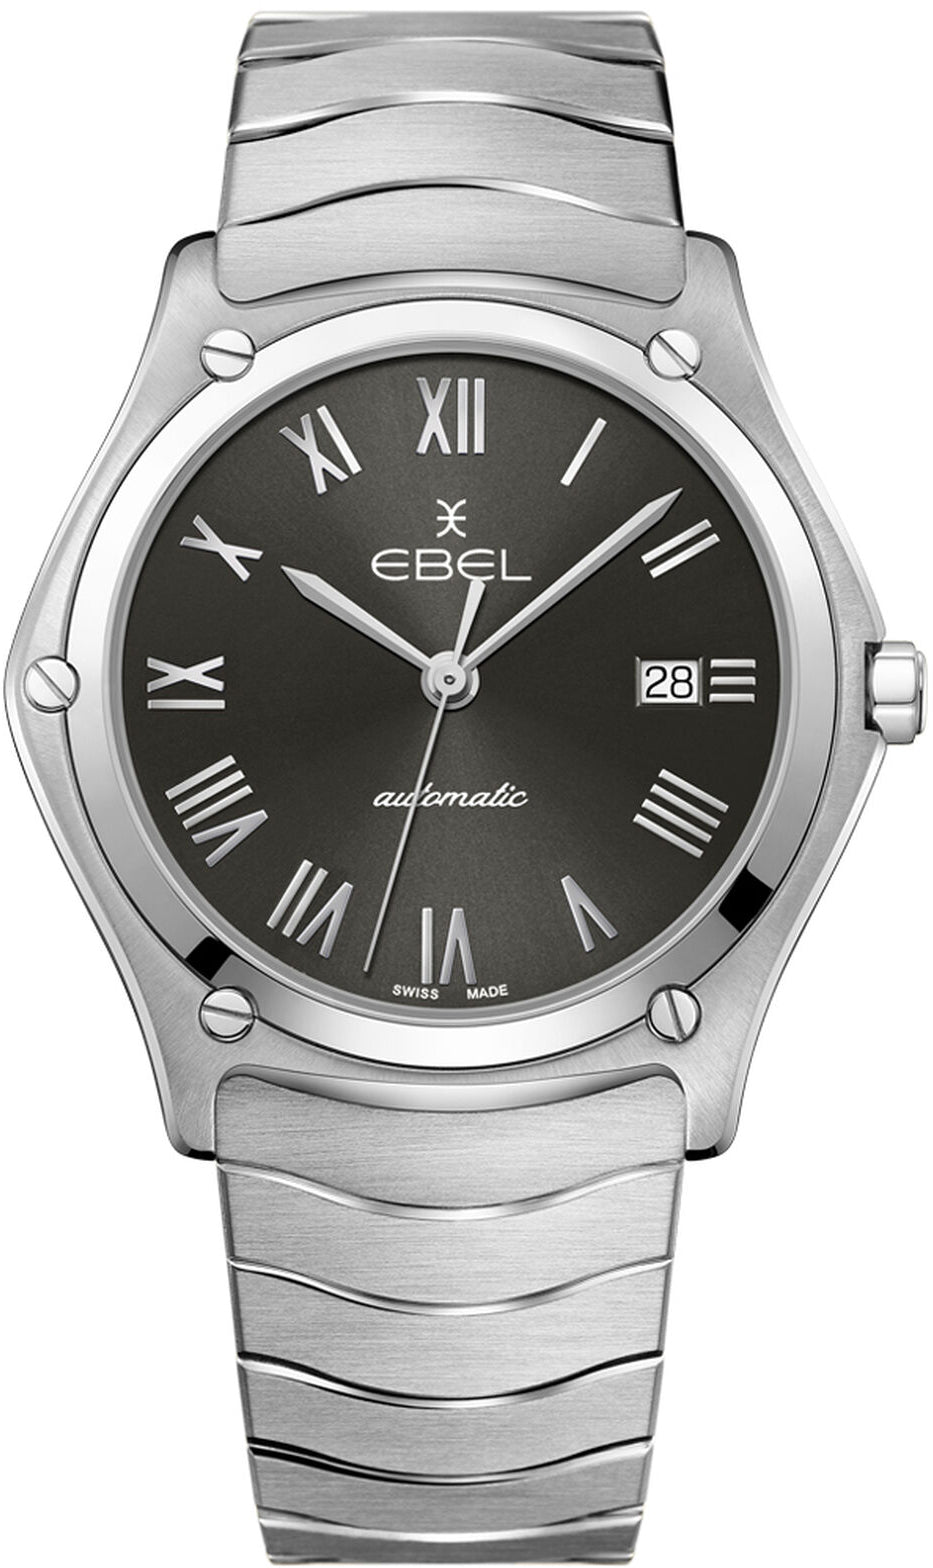 Photos - Wrist Watch Ebel Watch Sport Classic Mens EBL-281 